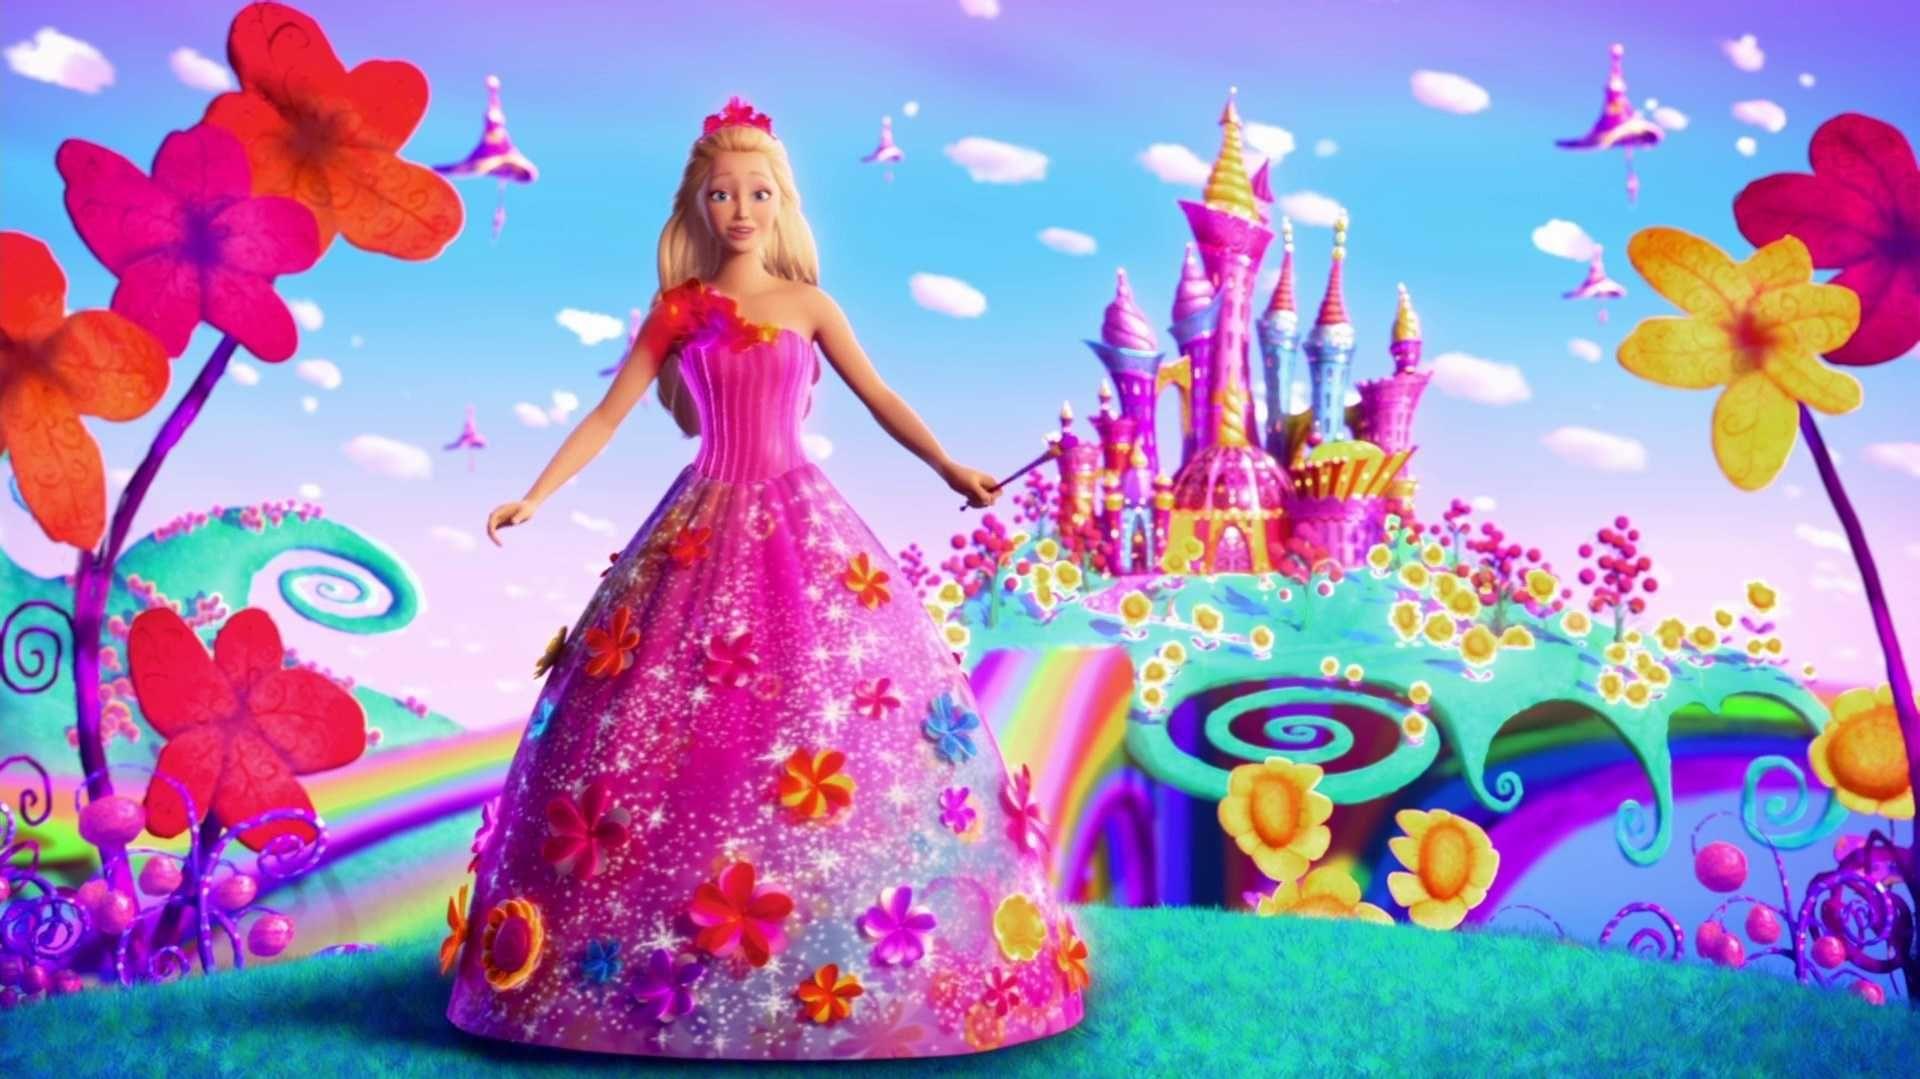 Barbie HD Wallpaper Princess Image